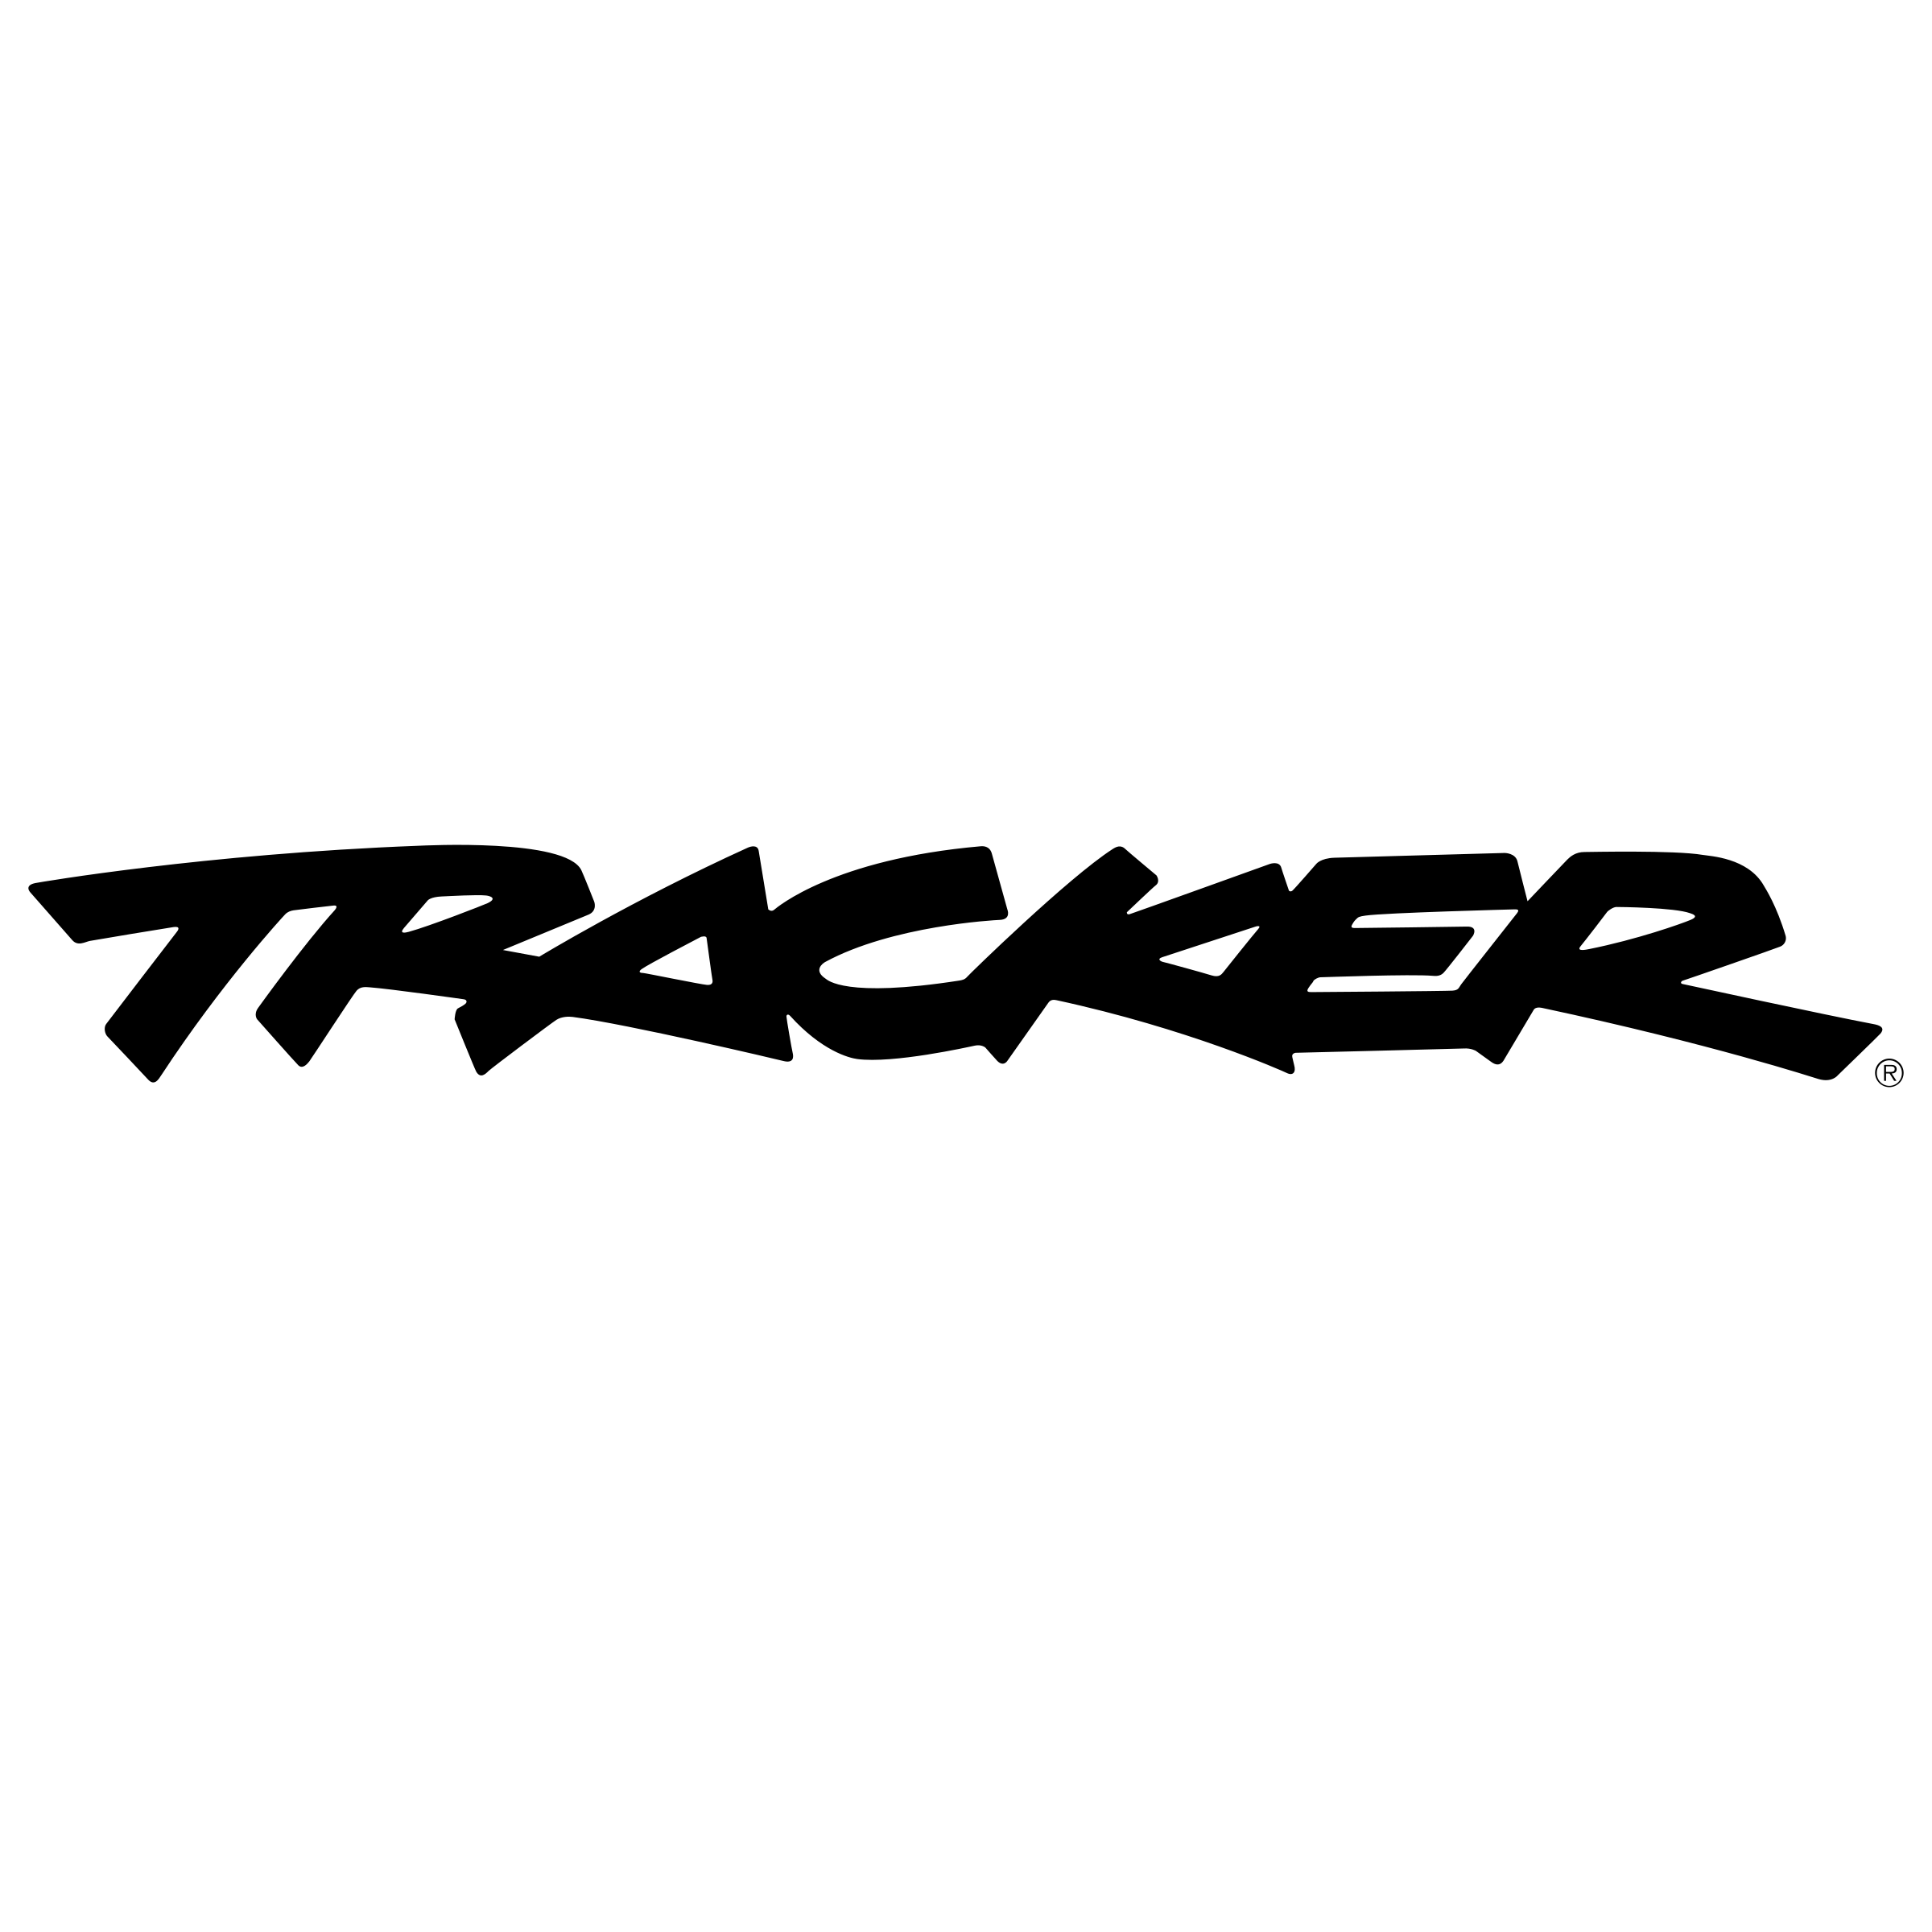 Tracker Logo - Tracker Logo PNG Transparent & SVG Vector - Freebie Supply